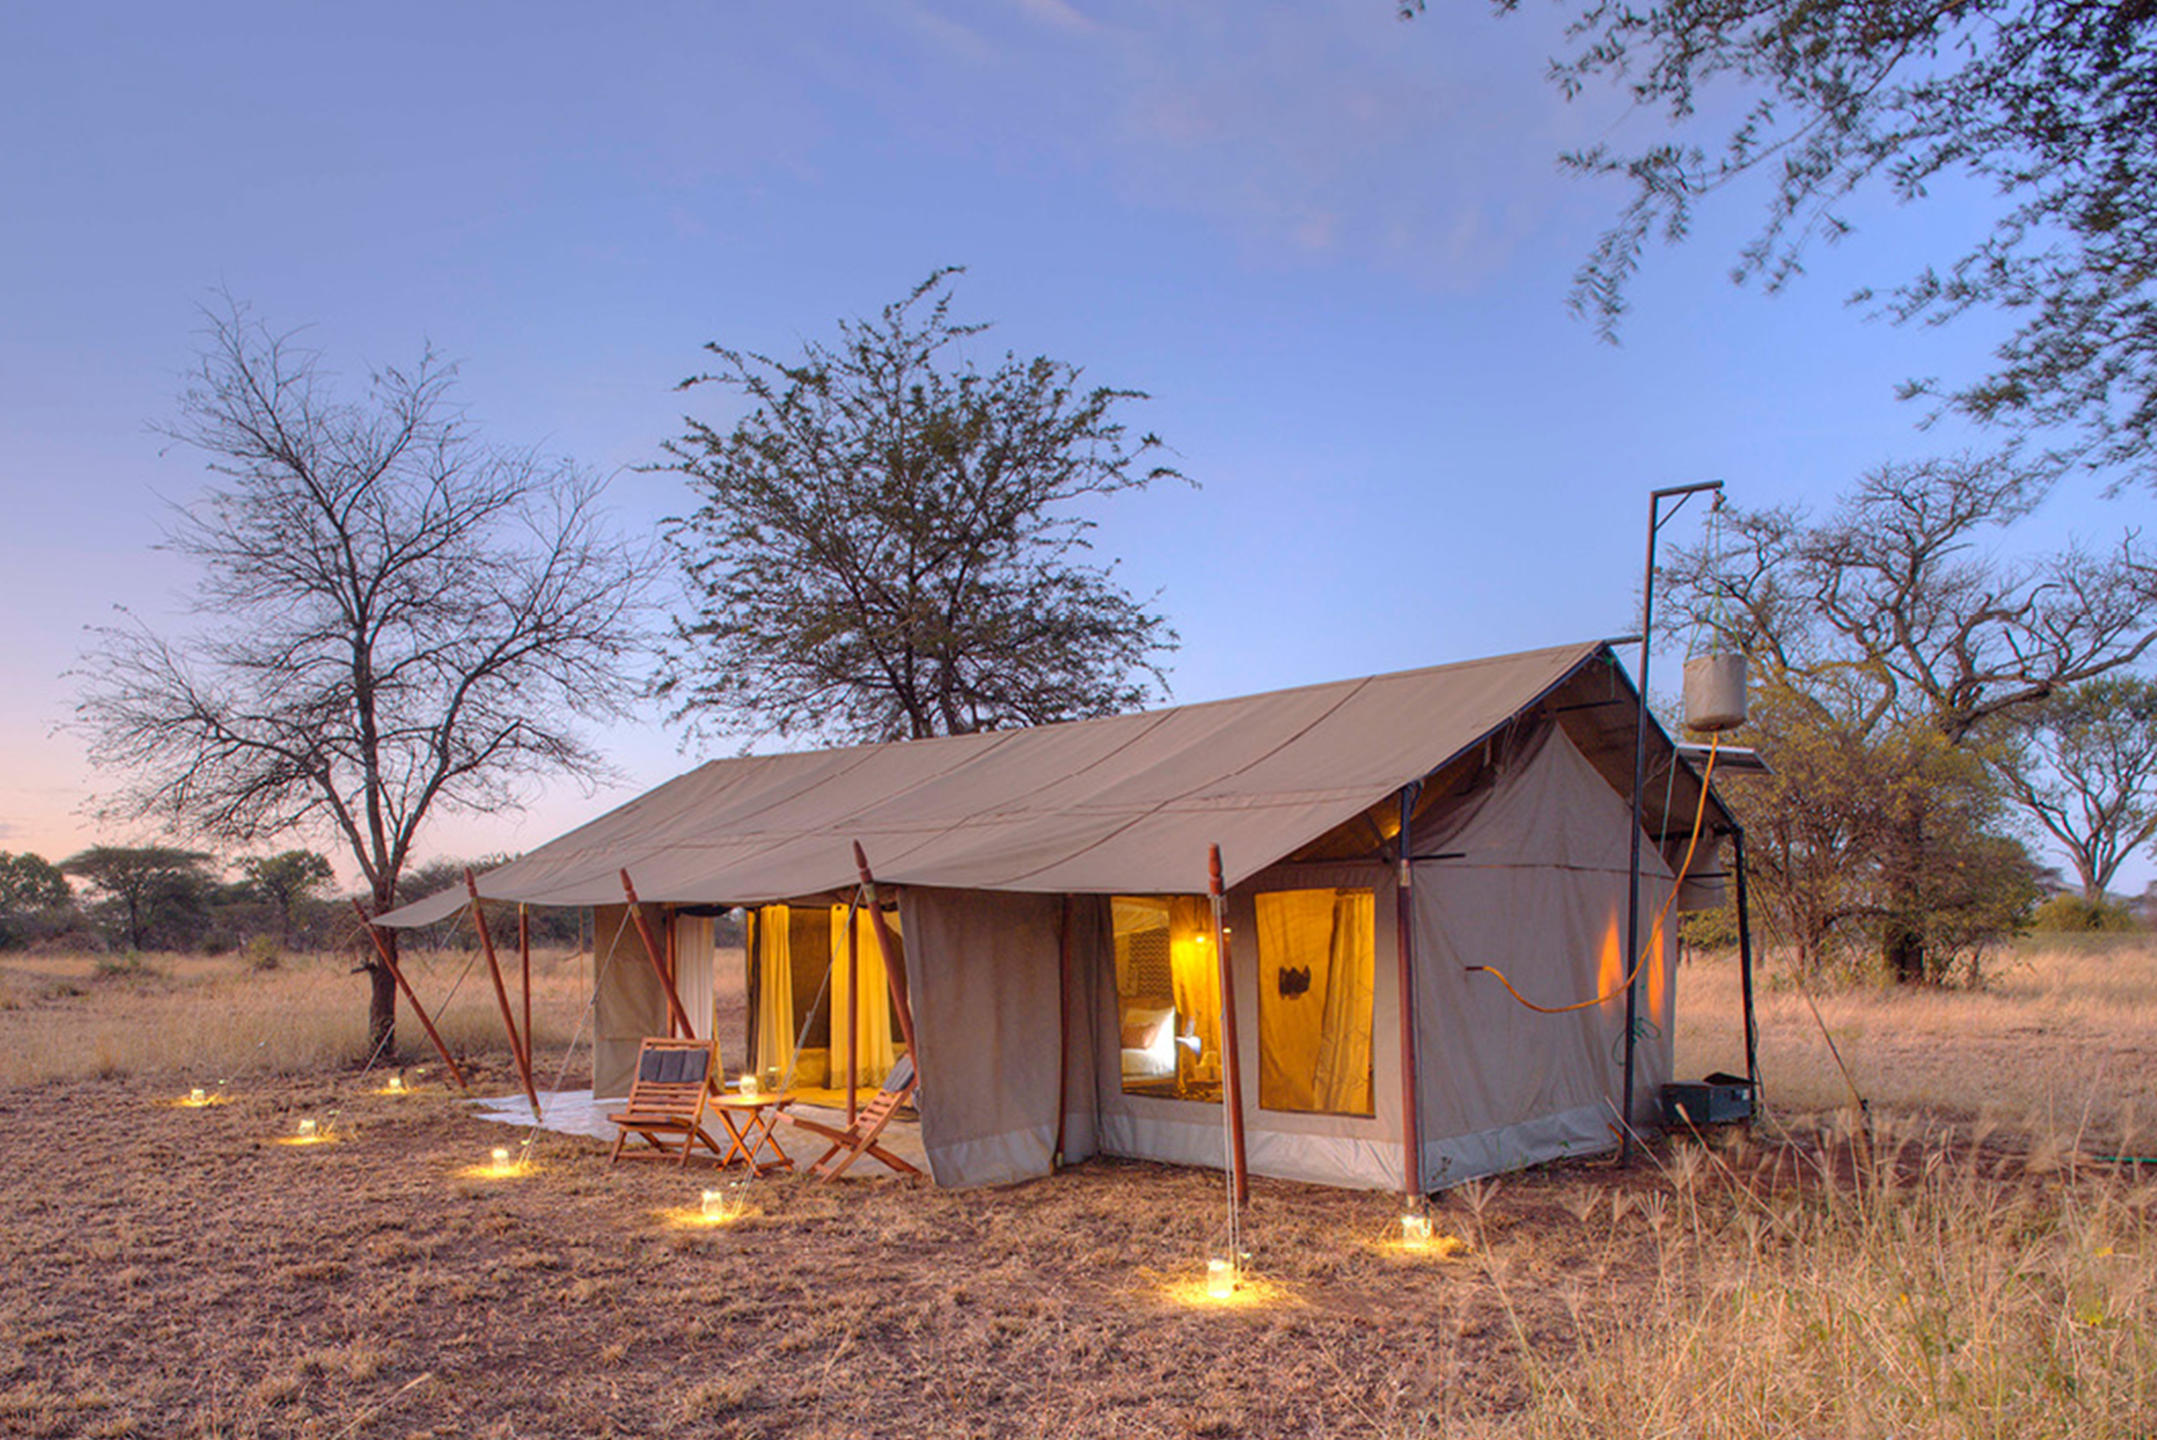 Ubuntu Migration Camp, Serengeti National Park, Tanzania 